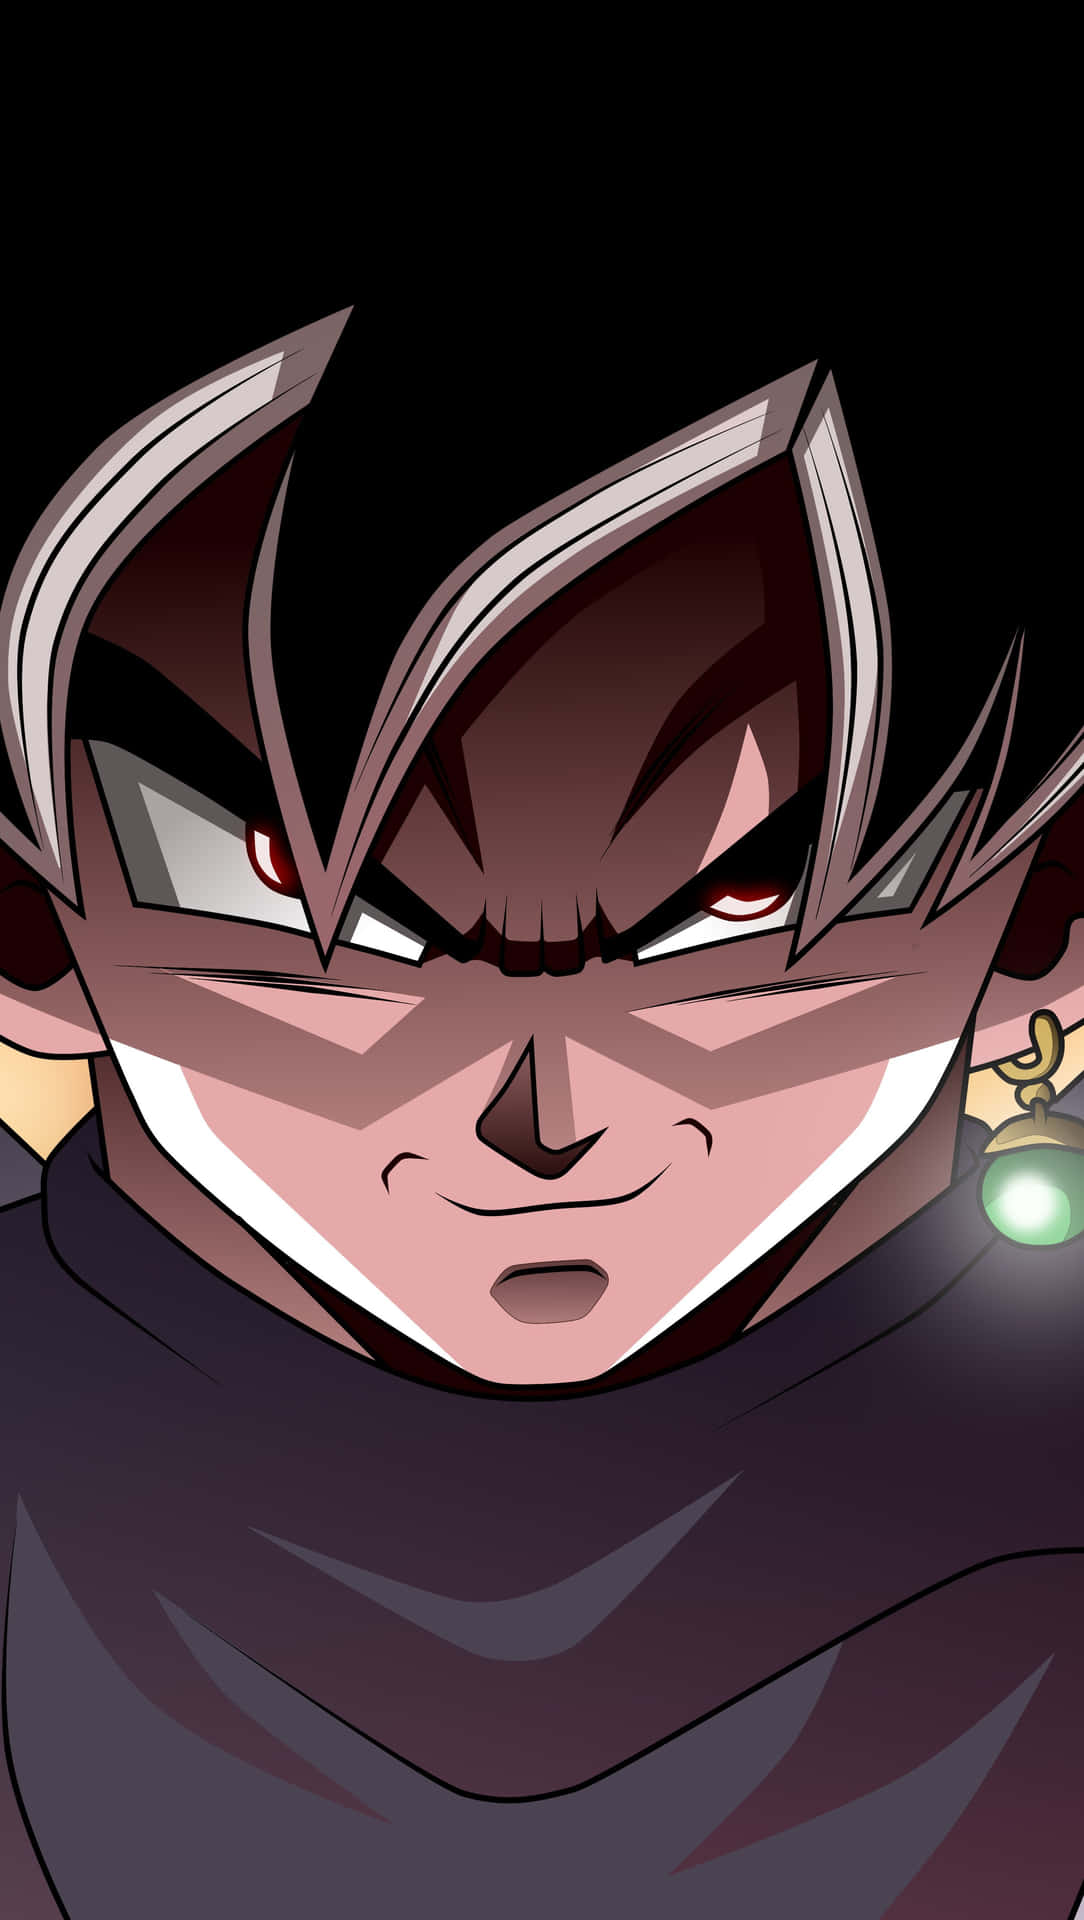 "Powering Up Goku Black!"